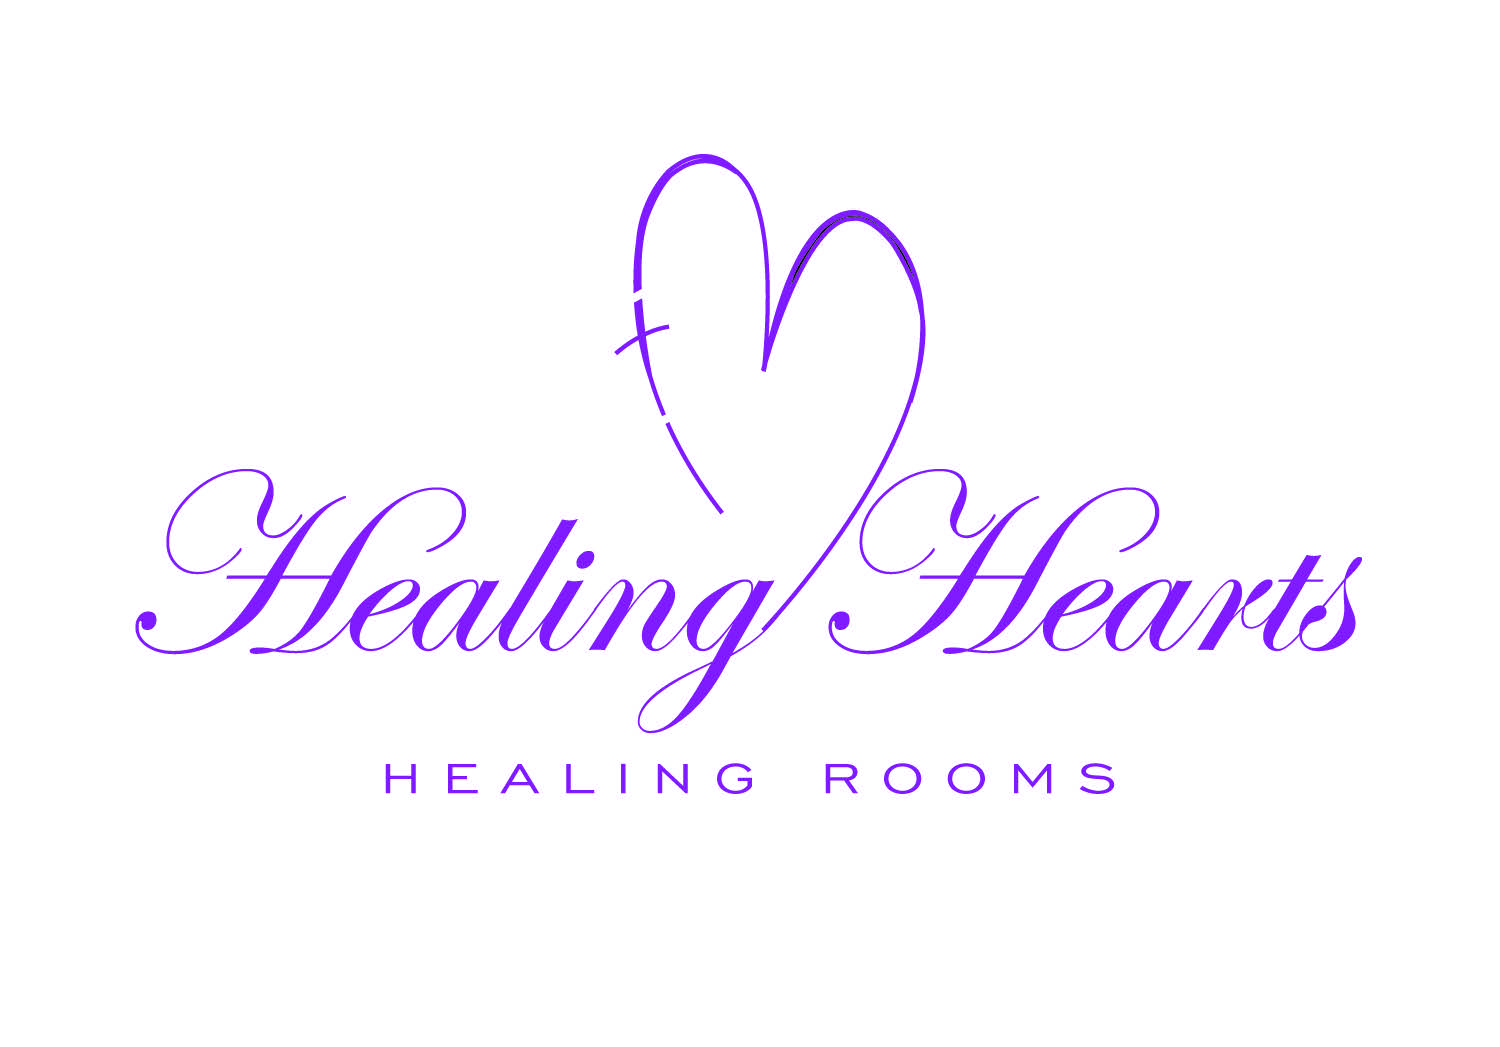 Healing Hearts Healing Rooms